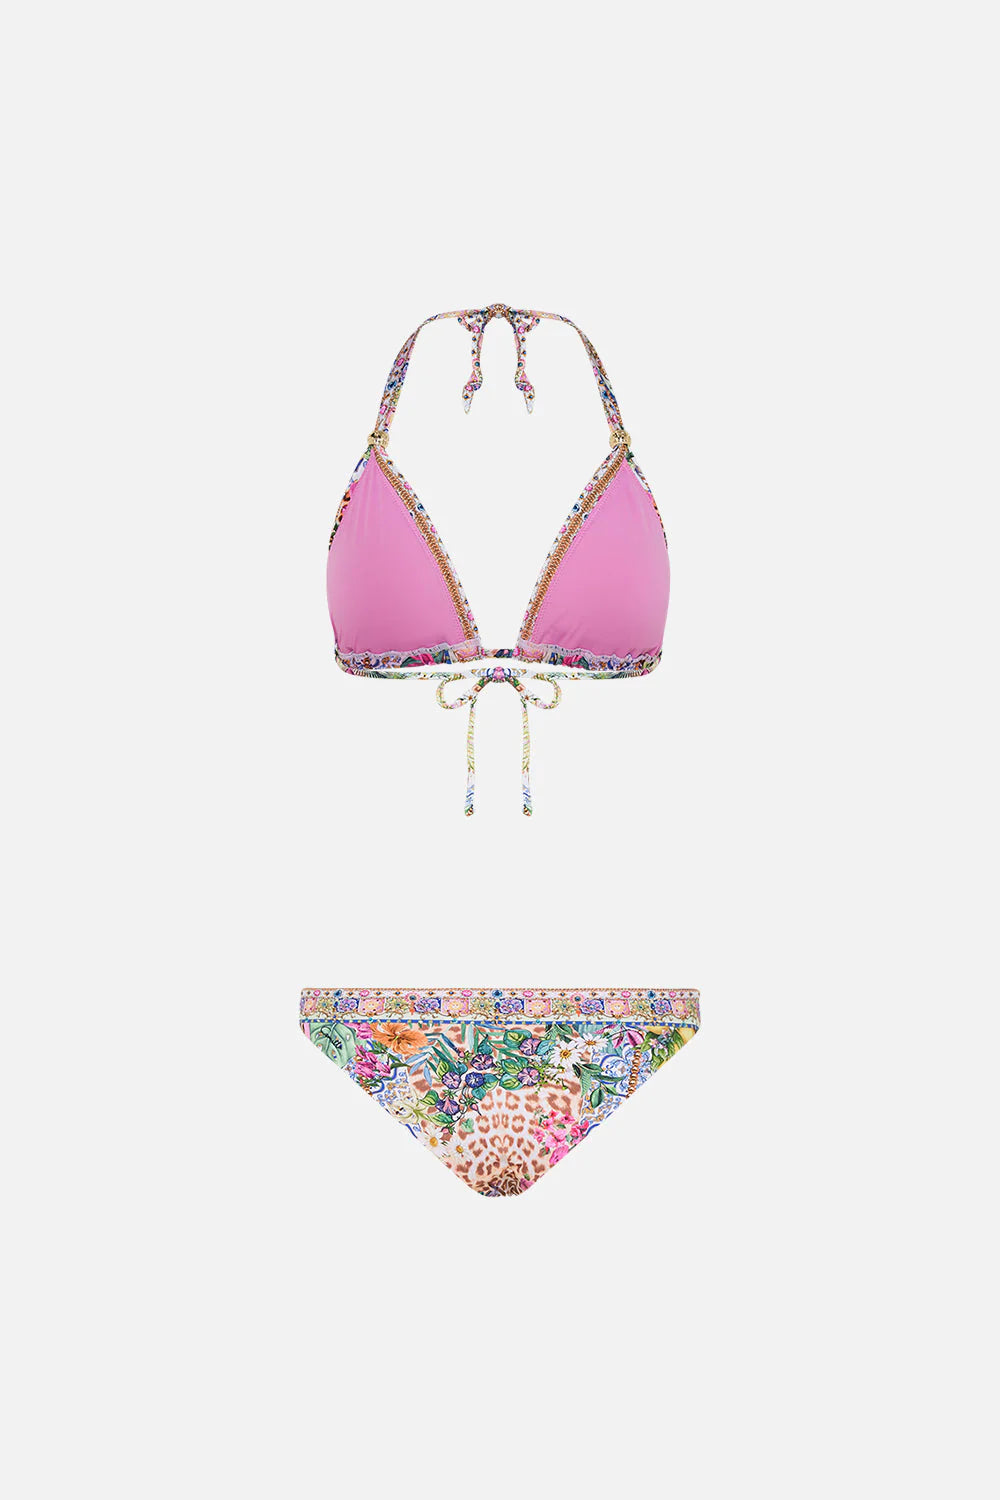 Camilla Ball Bikini Set, Flowers of Neptune I Floral Triangle Bikini